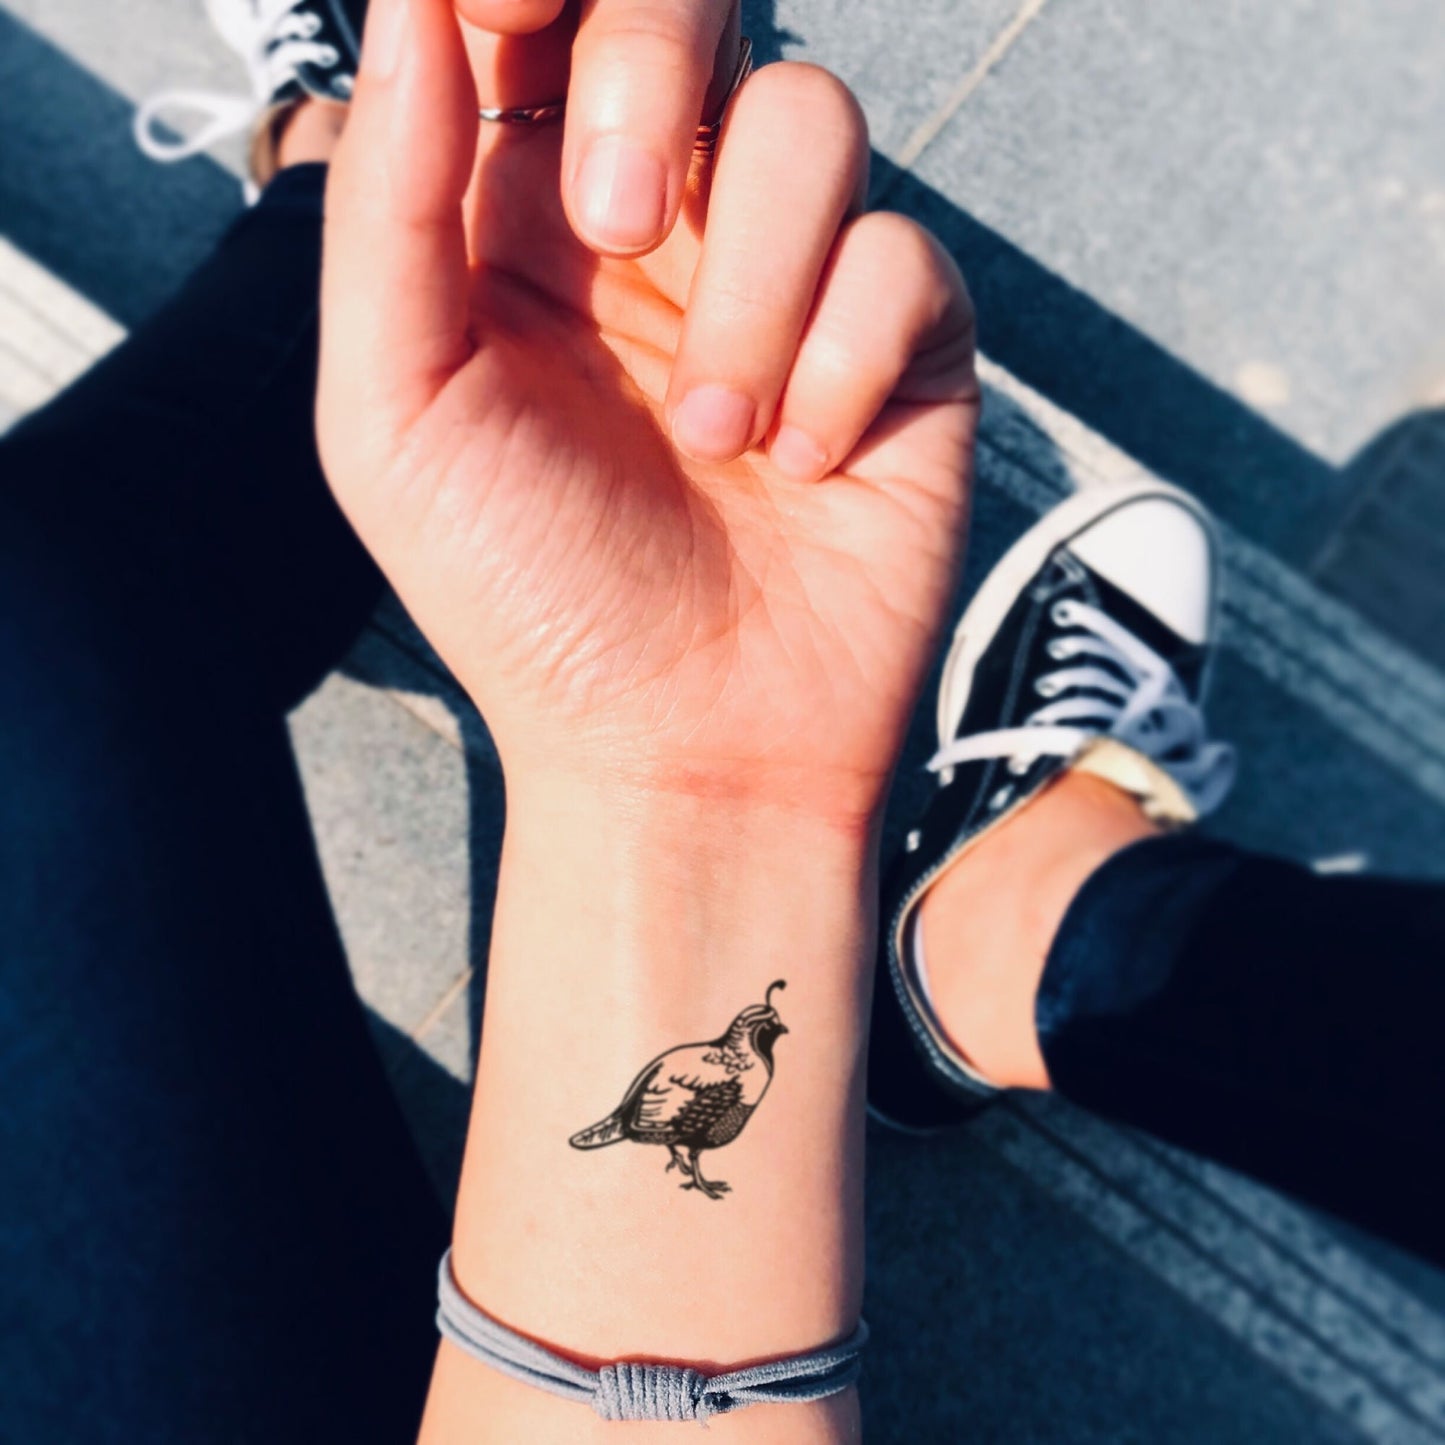 fake small quail bird animal temporary tattoo sticker design idea on wrist